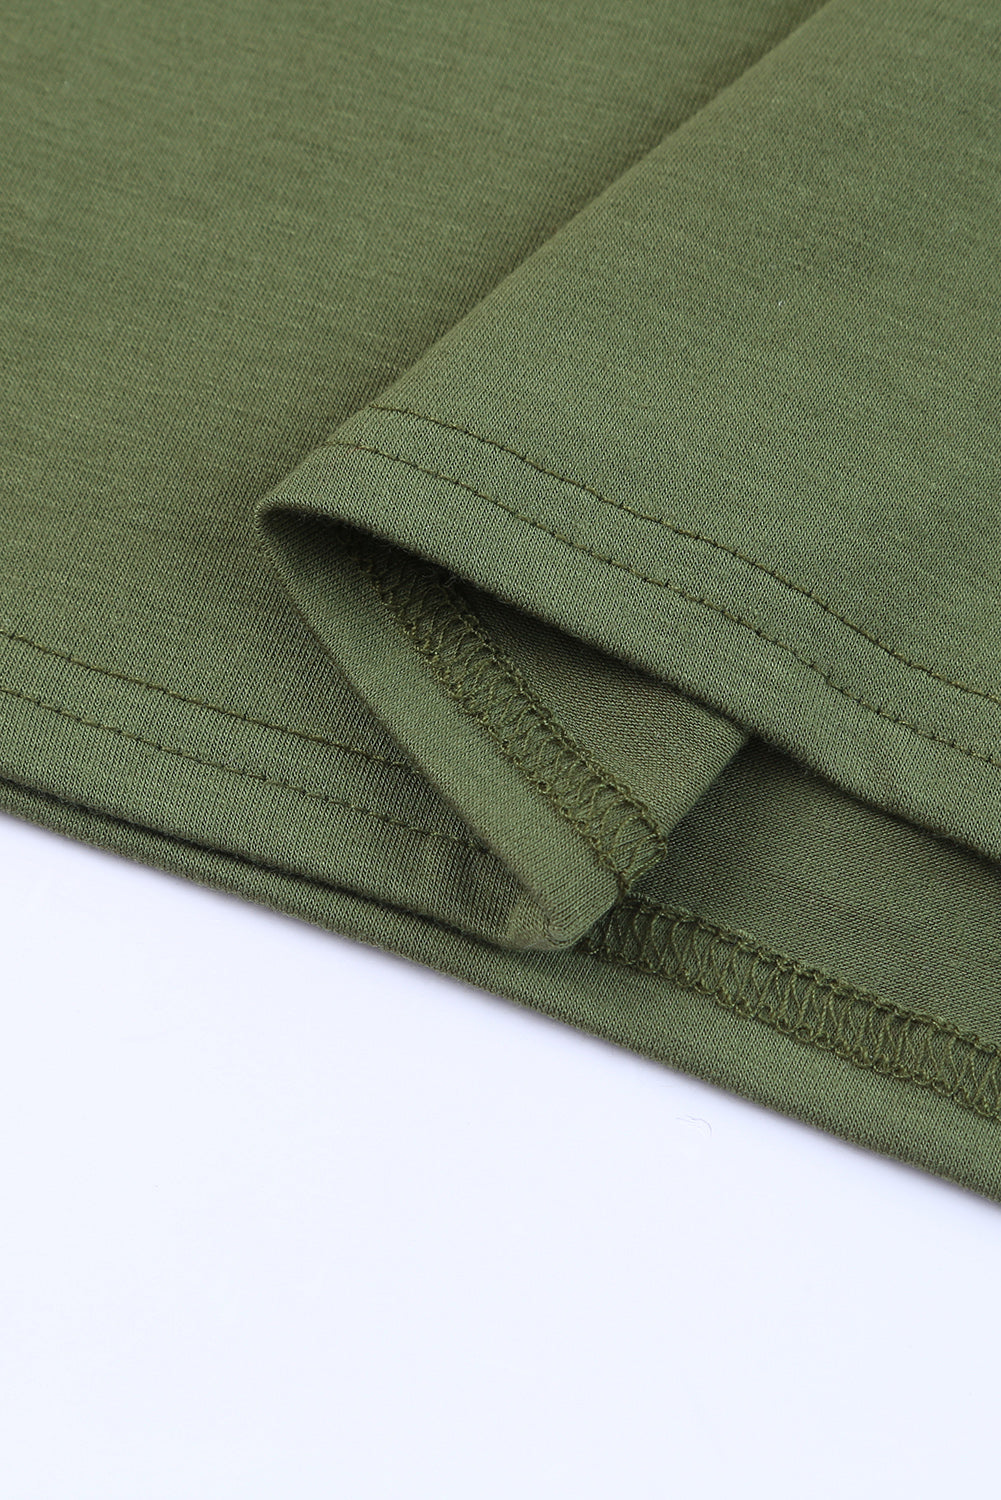 Light Green Side Pockets Short Sleeve Tunic Top